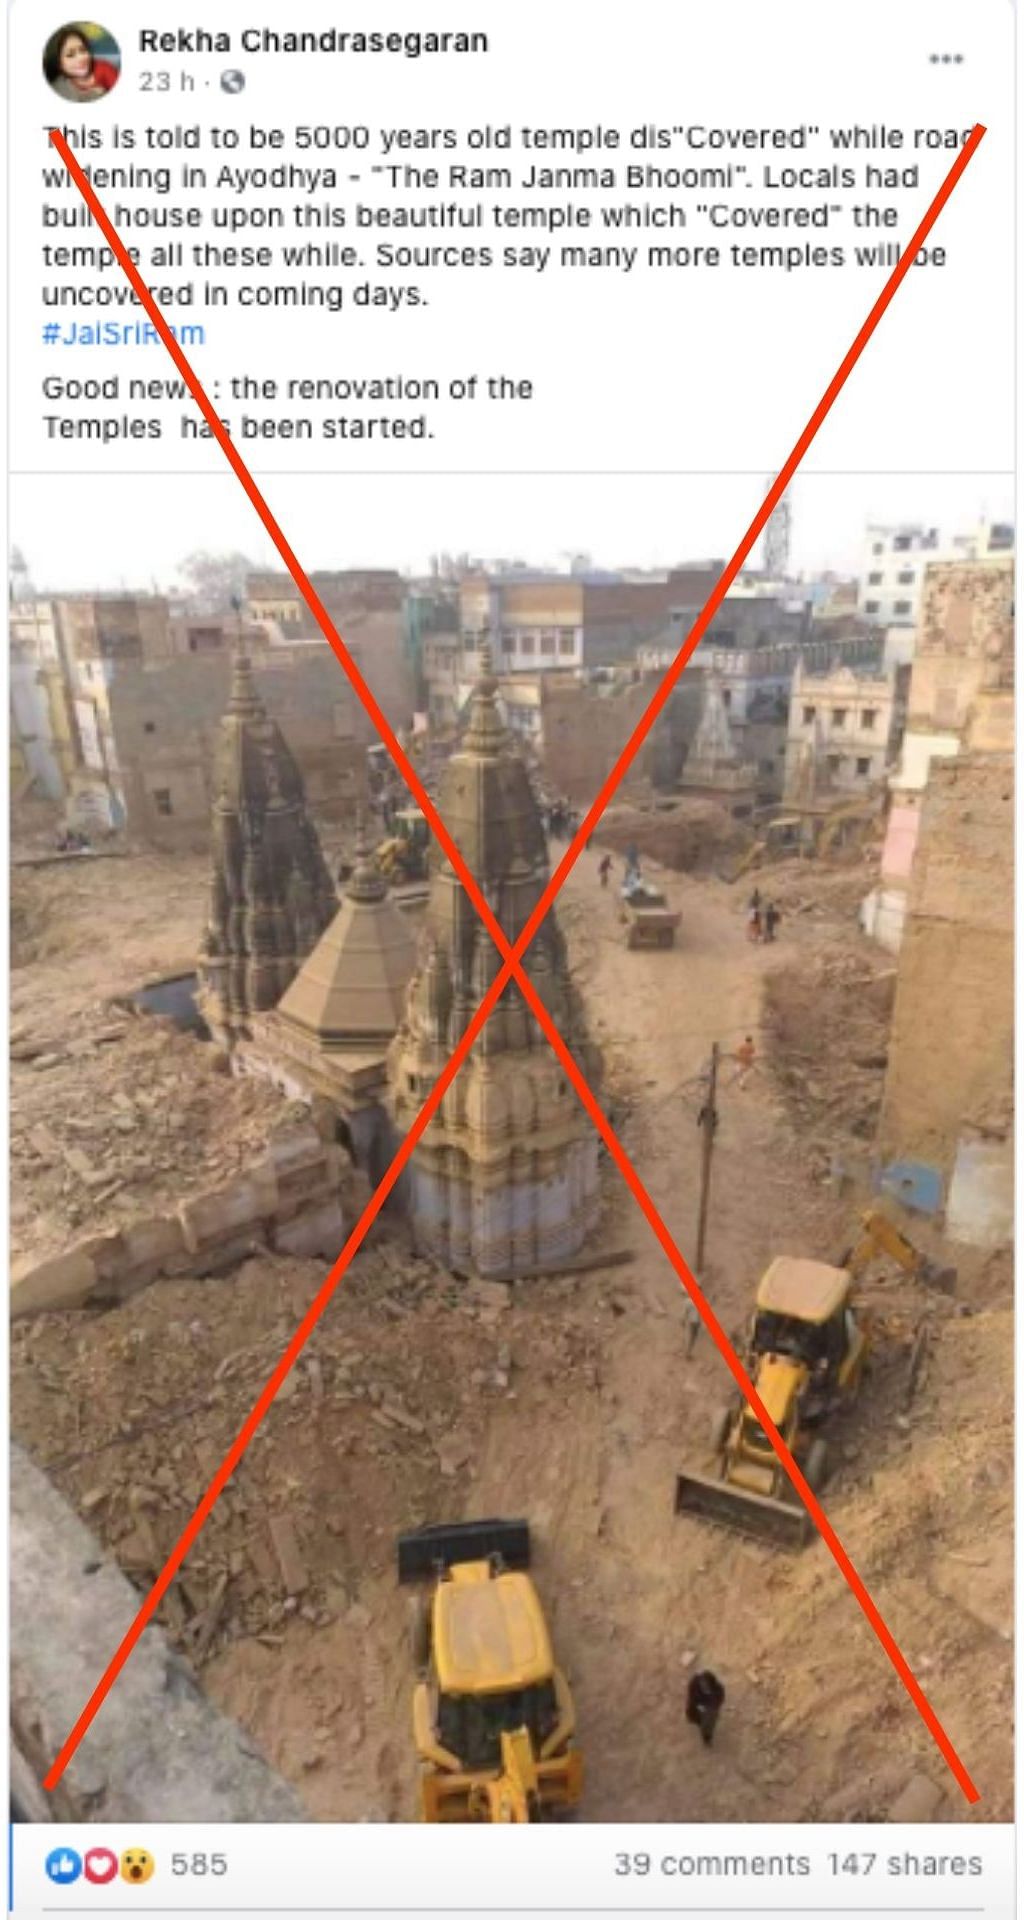 The image is from the Kashi Vishwanath Corridor Project site in Varanasi, Uttar Pradesh.